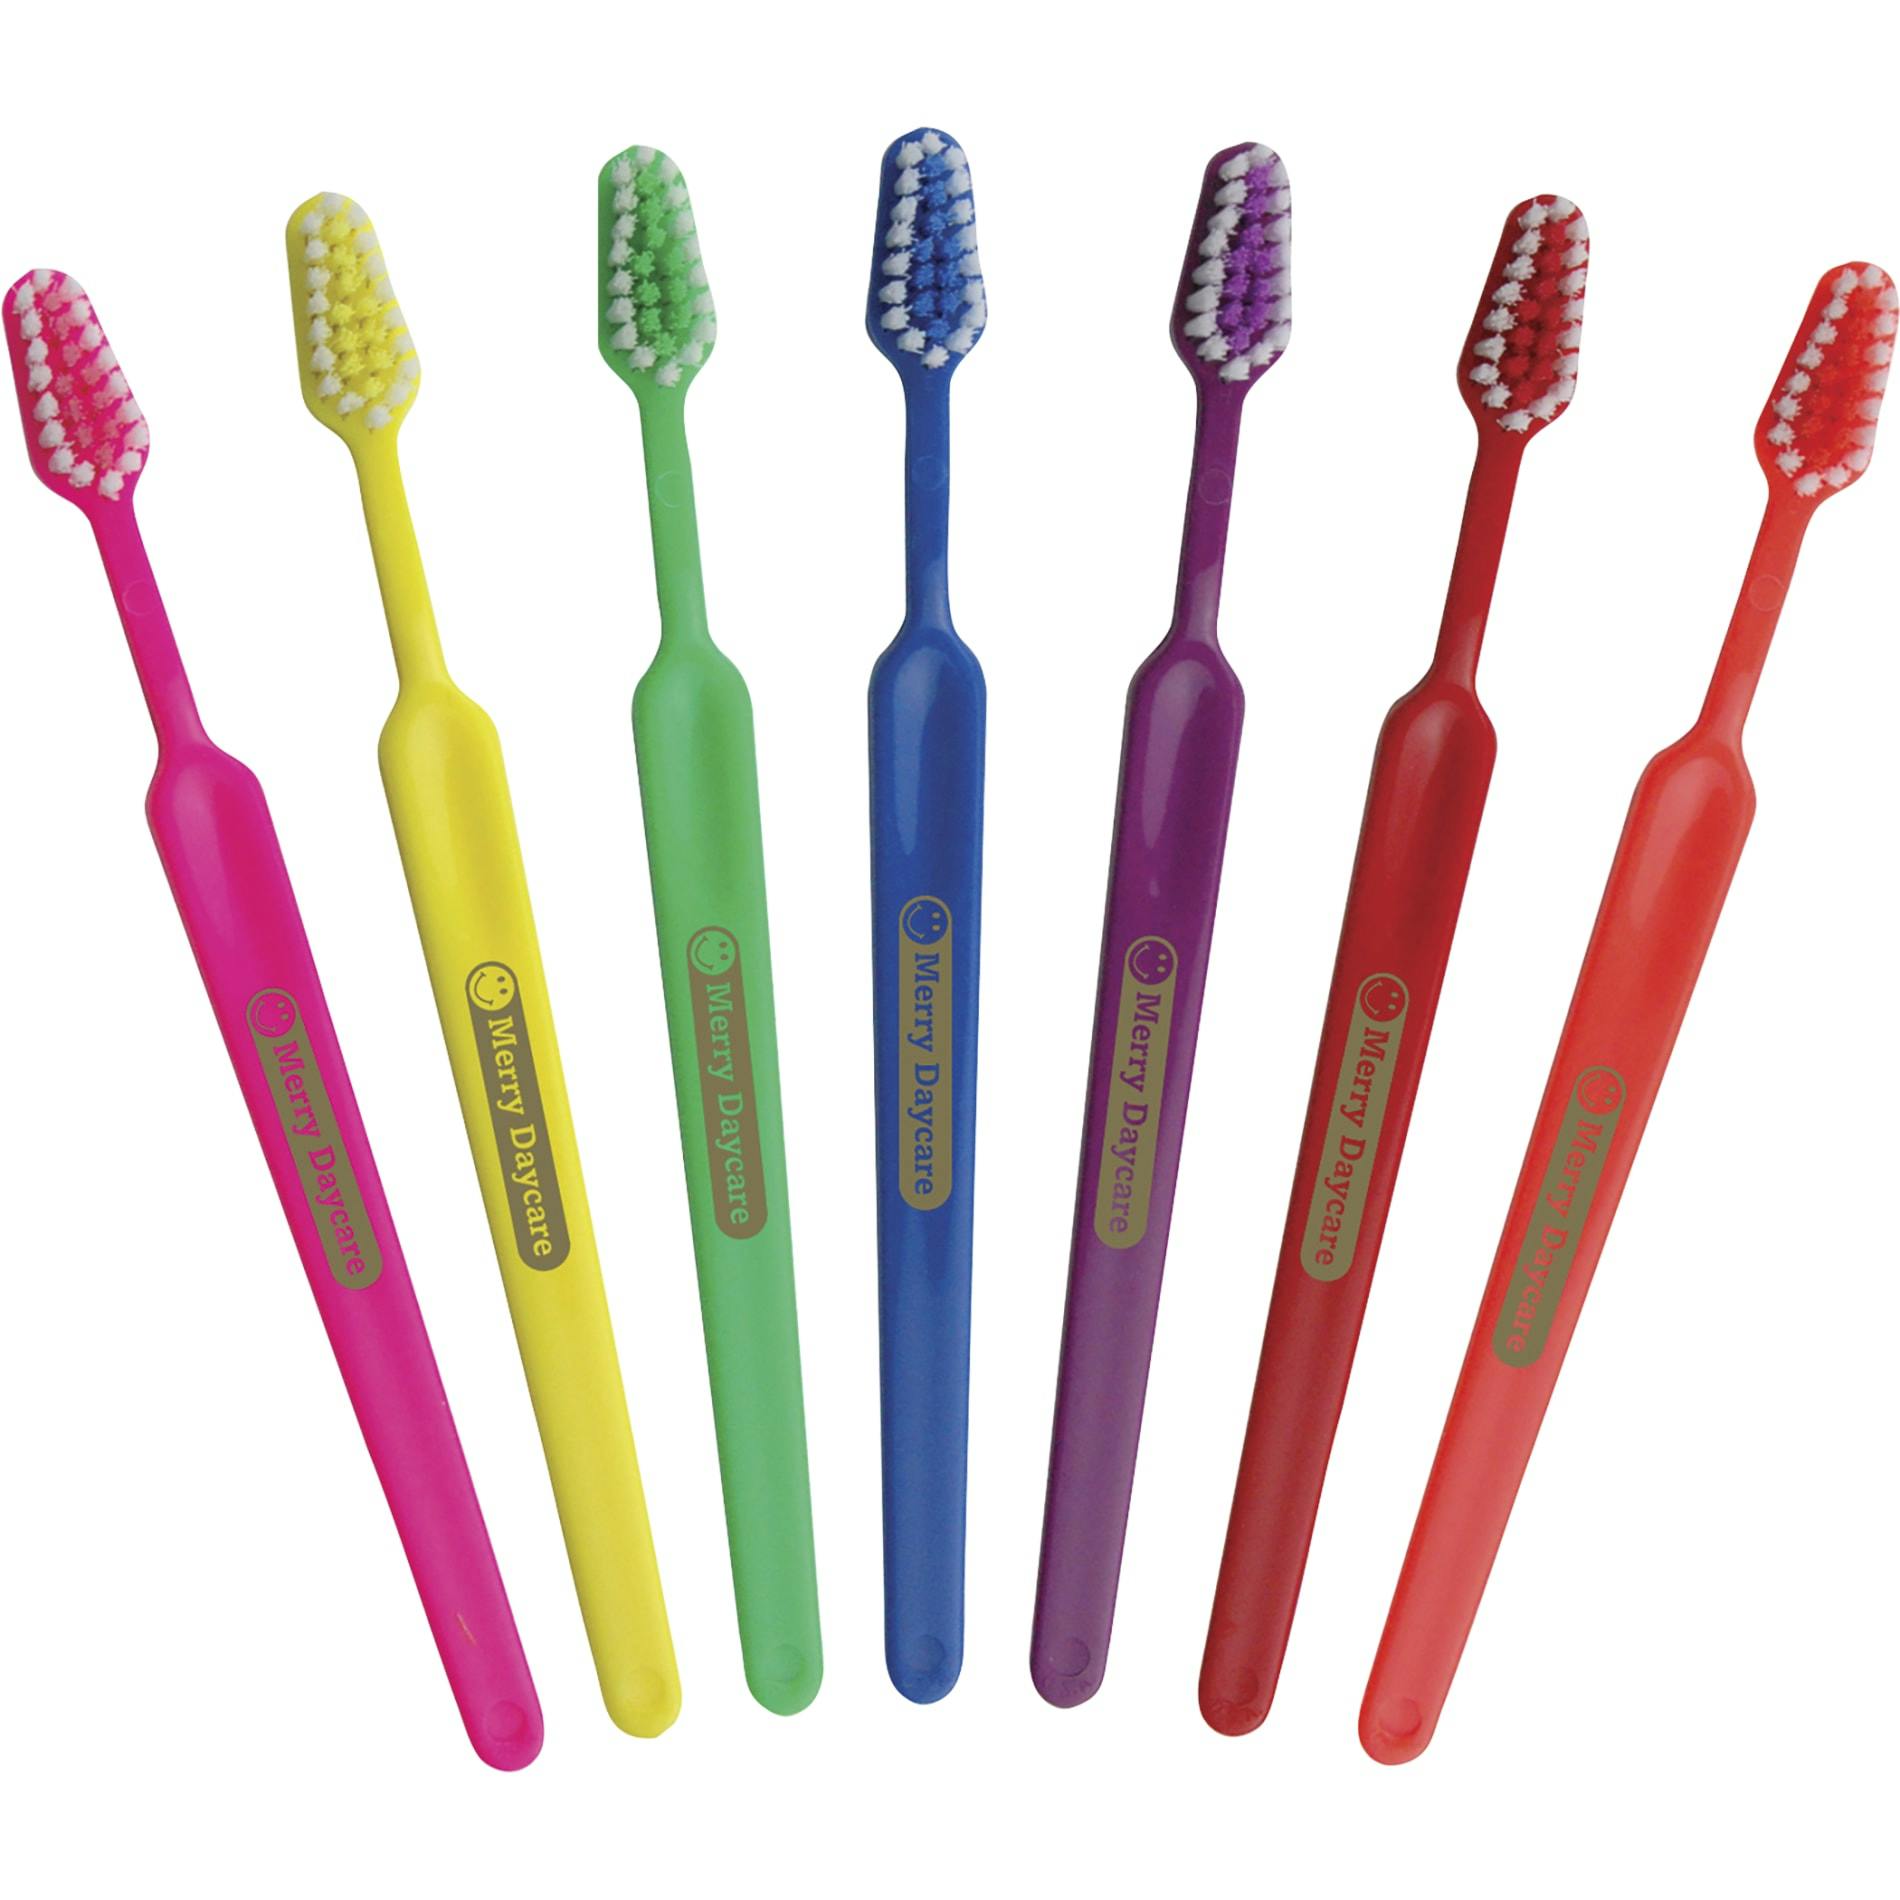 Junior Toothbrush - additional Image 1